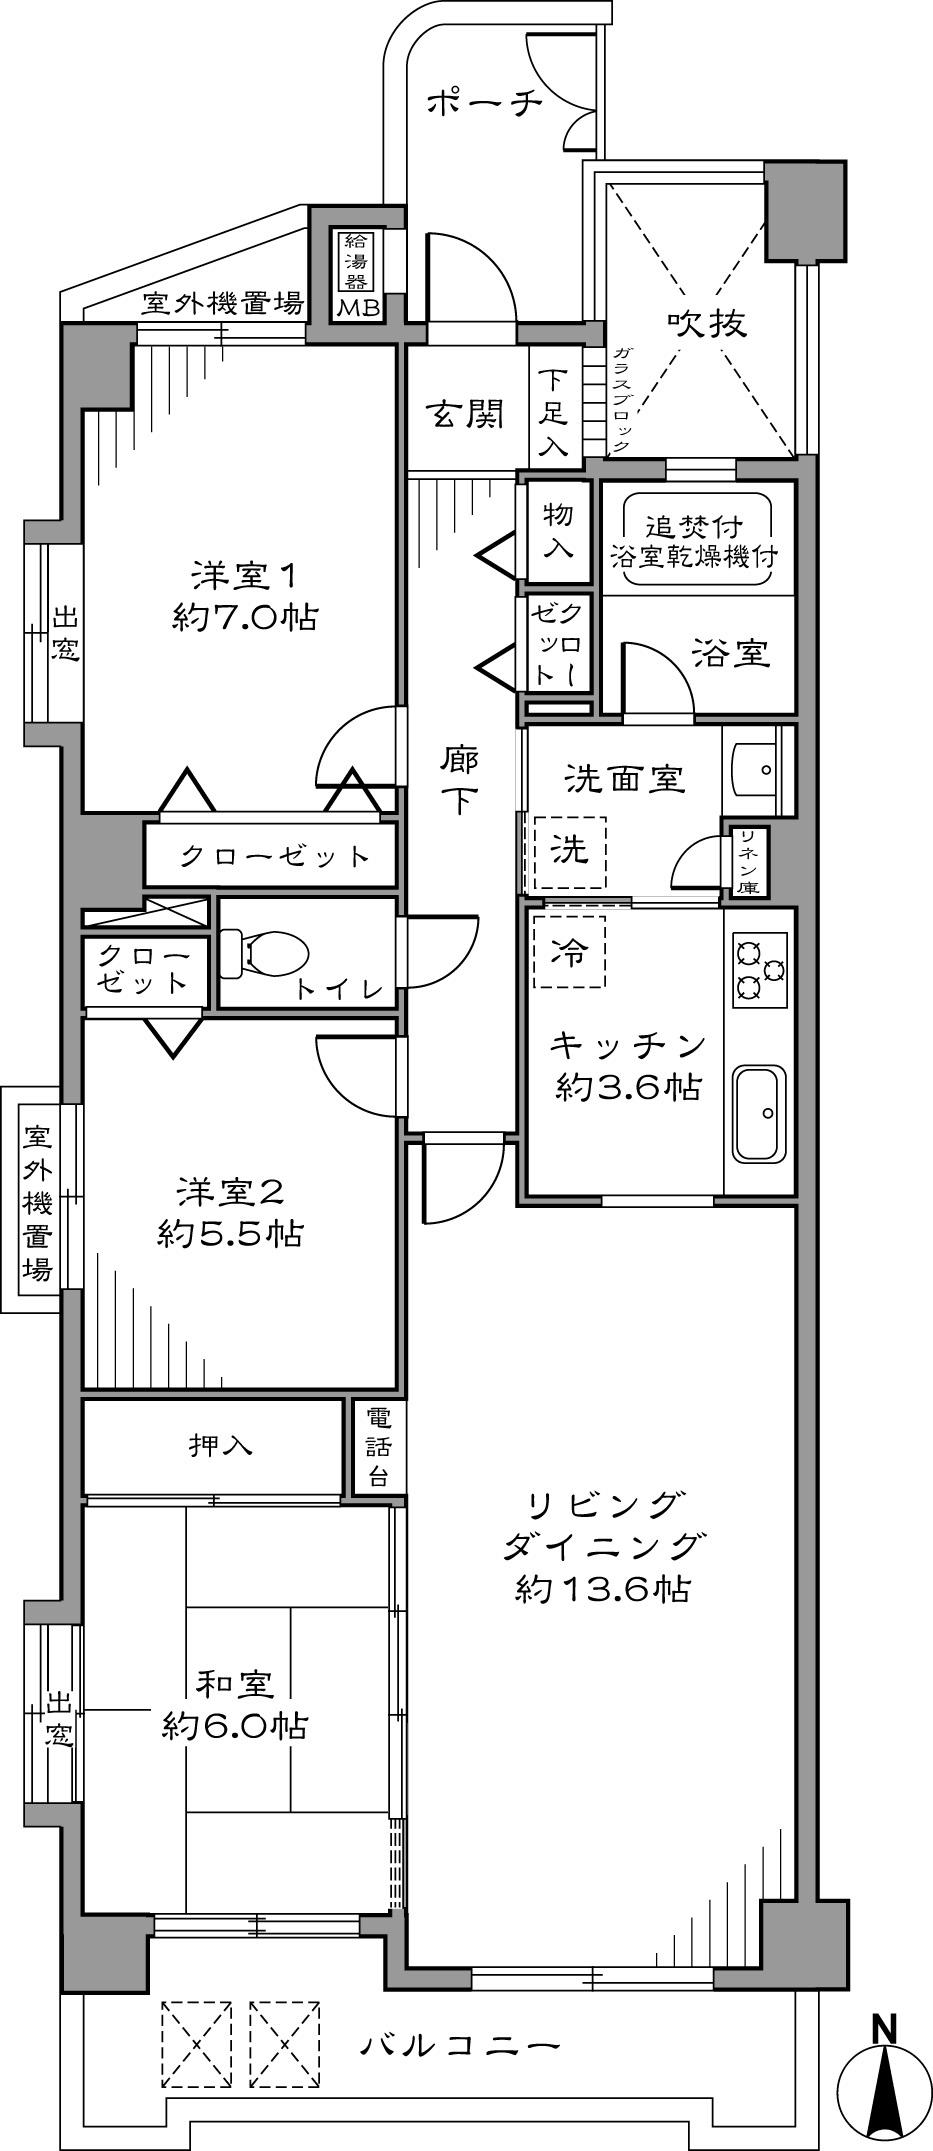 Floor plan. 2LDK + S (storeroom), Price 39,800,000 yen, Occupied area 81.03 sq m , Balcony area 8.01 sq m